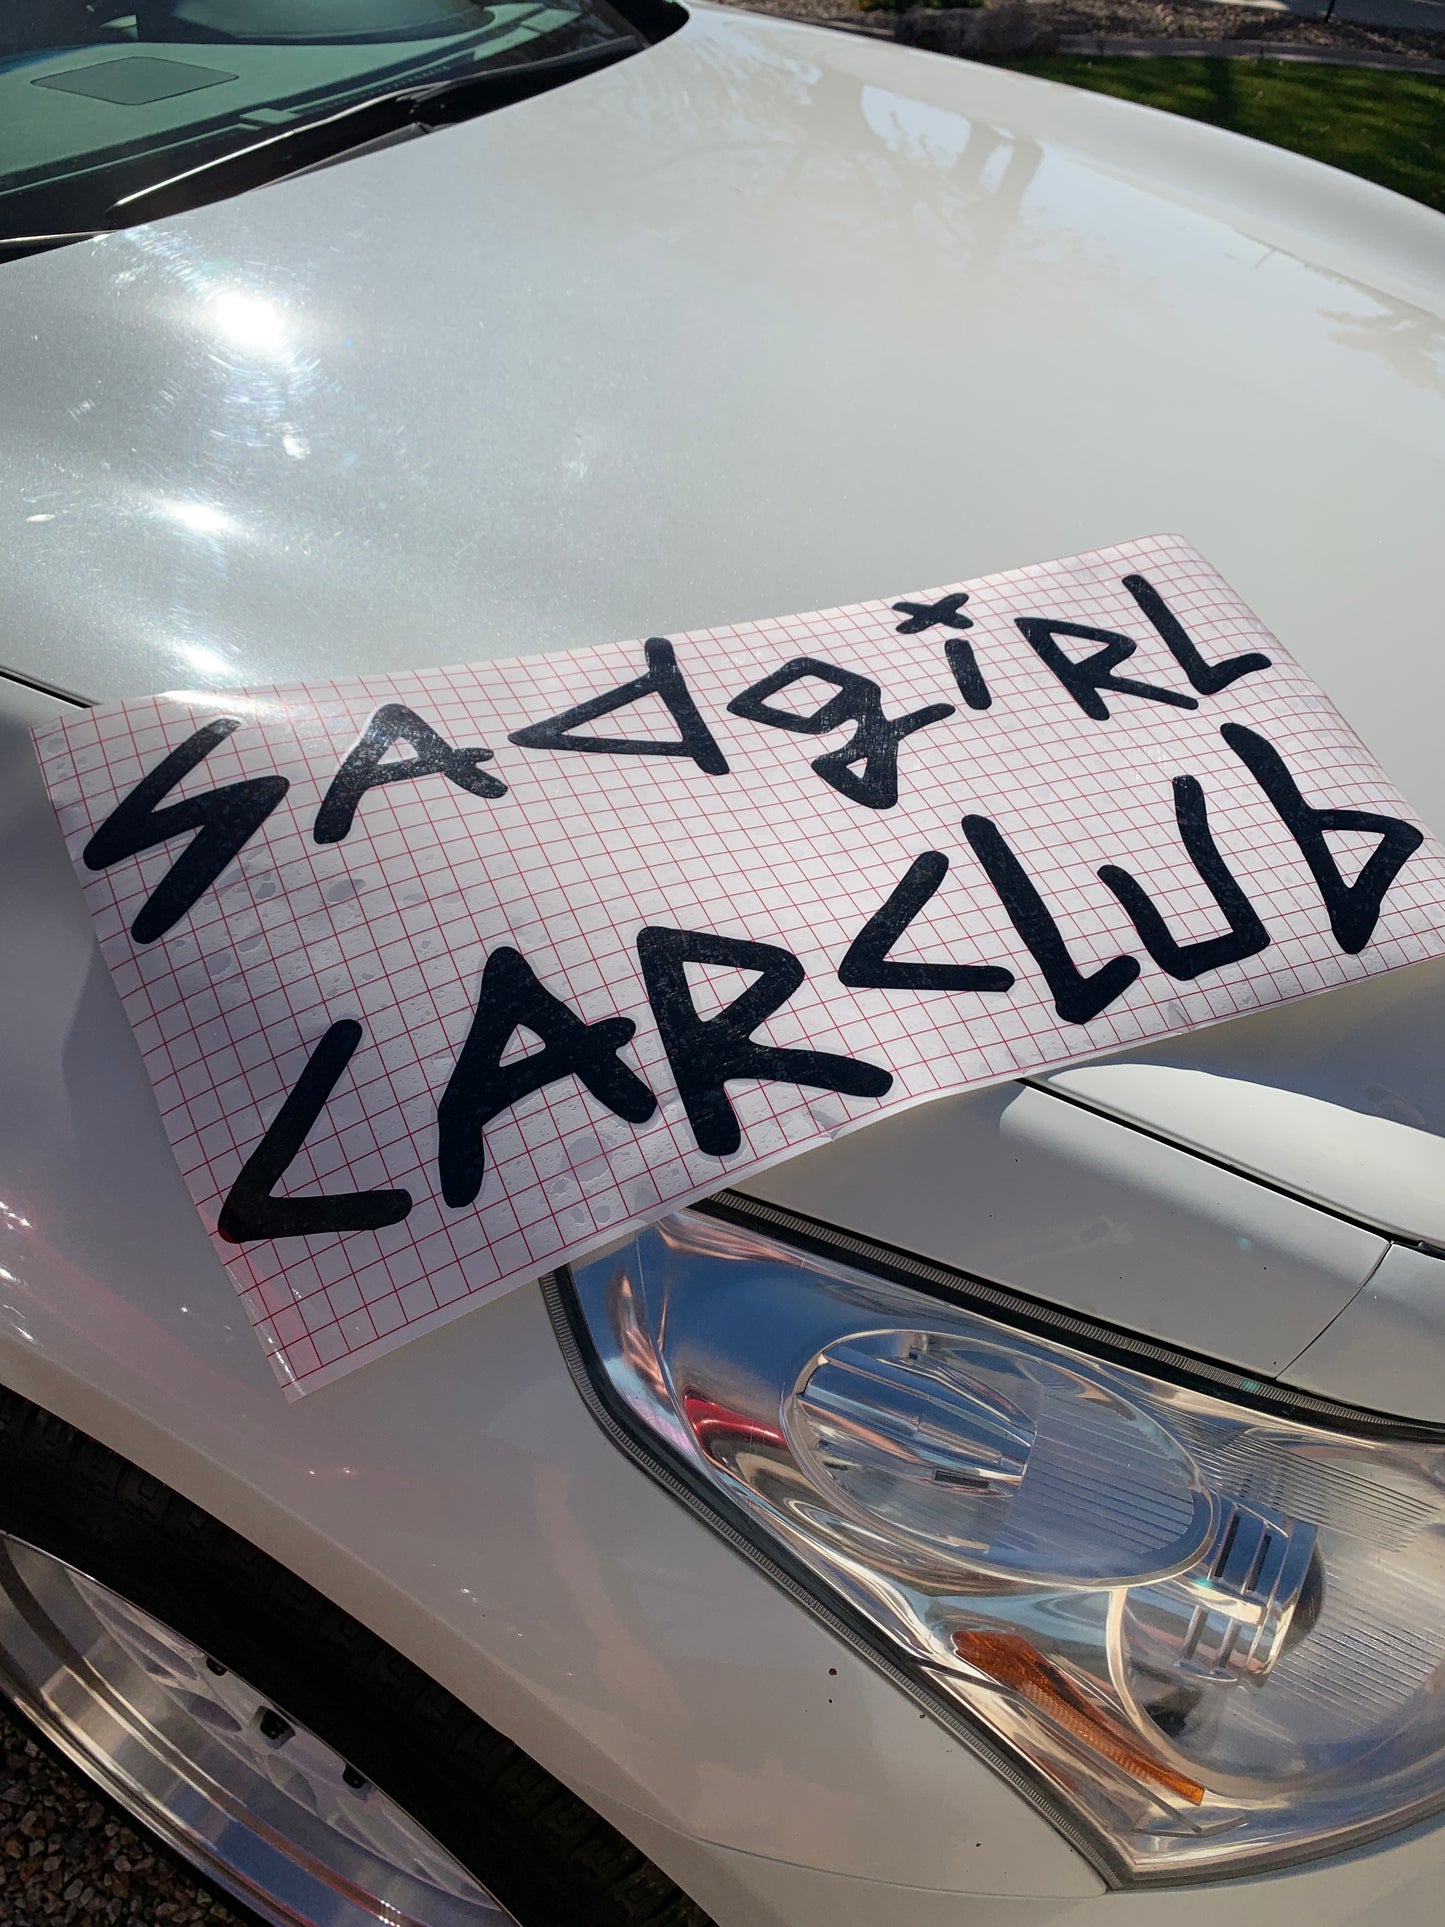 Official sadgirlcarclub windshield banner